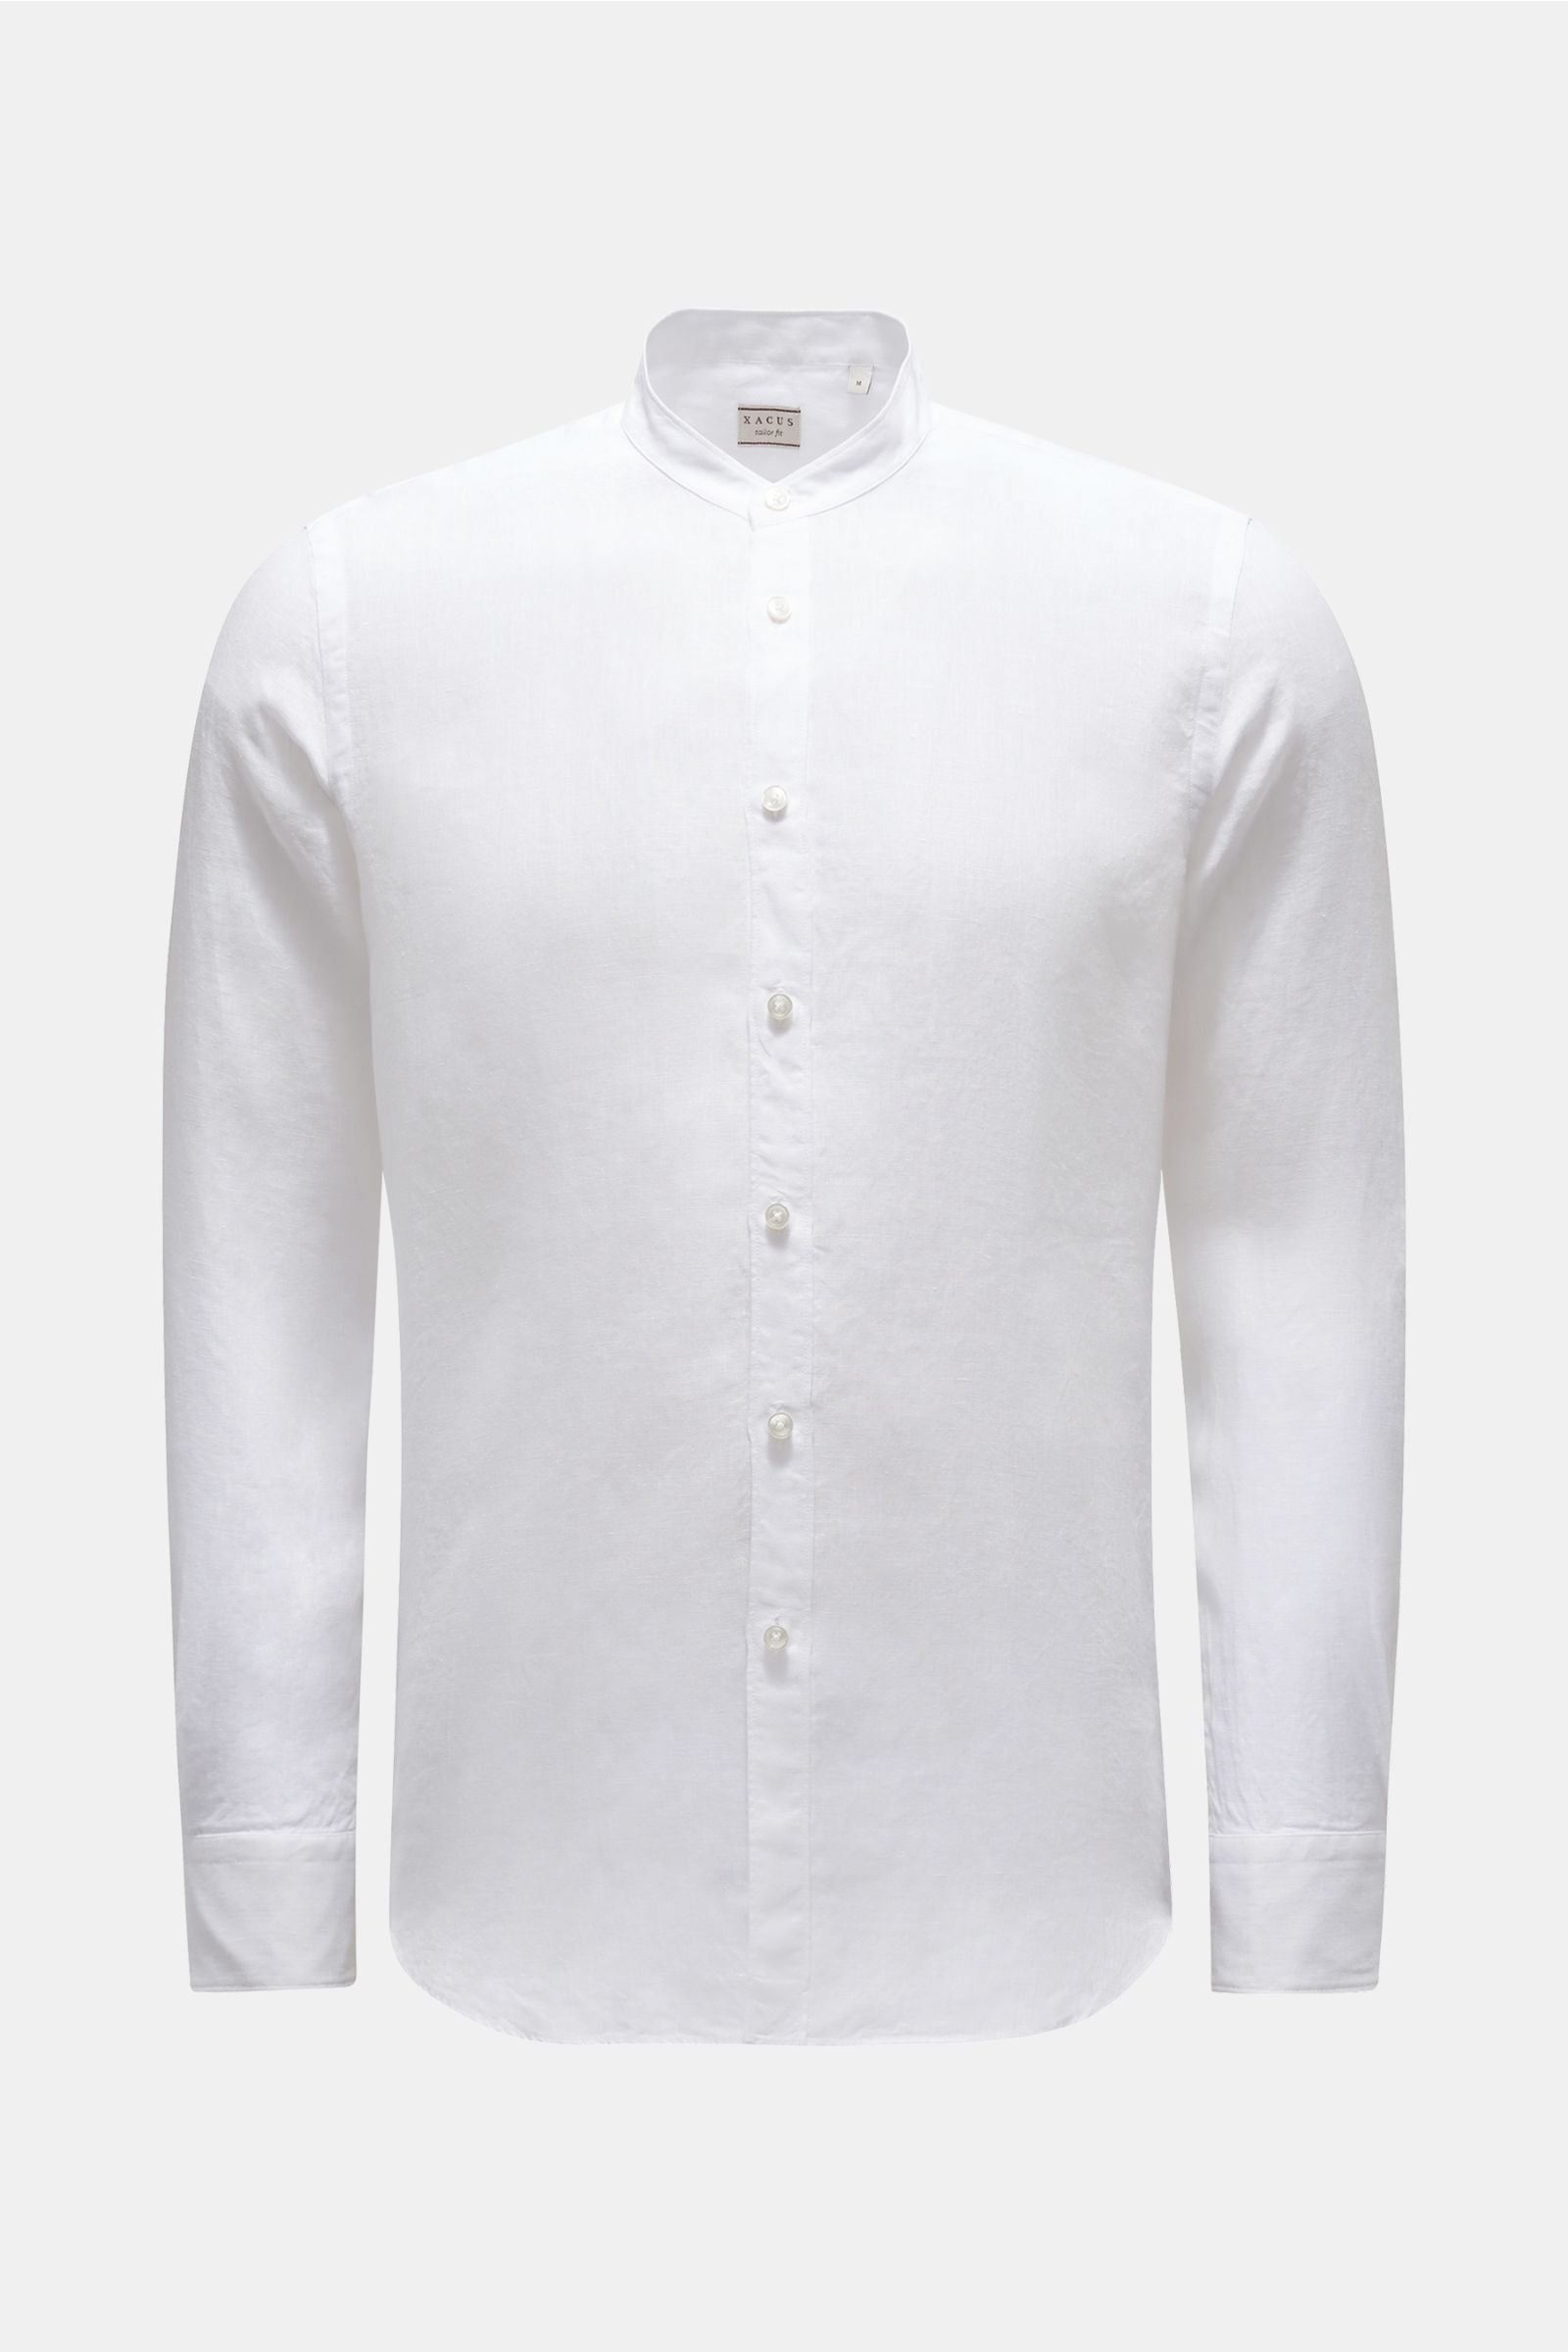 Linen shirt 'tailored fit' grandad collar white